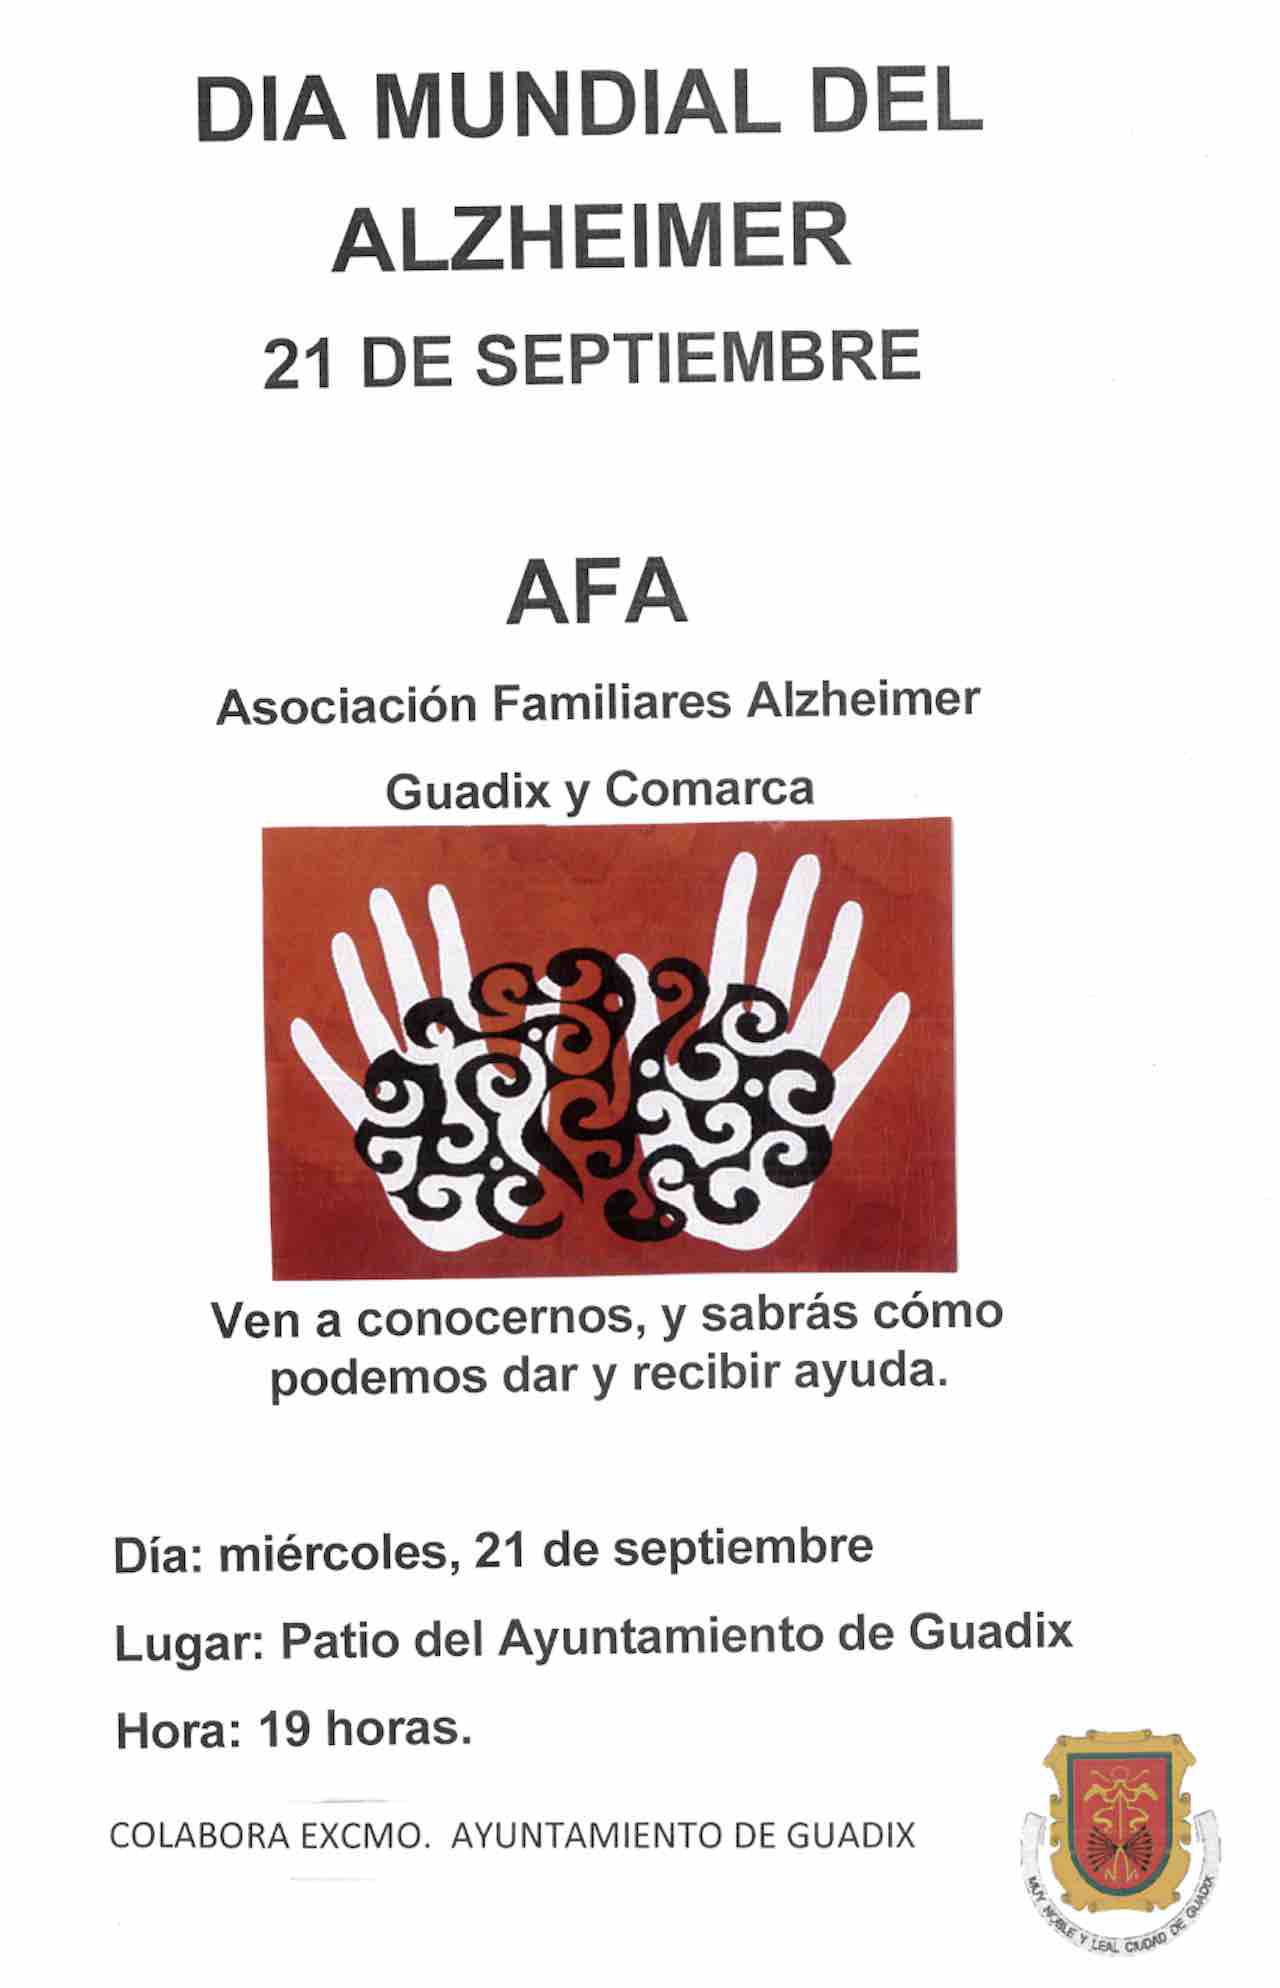 Dia mundial del Alzheimer Guadix